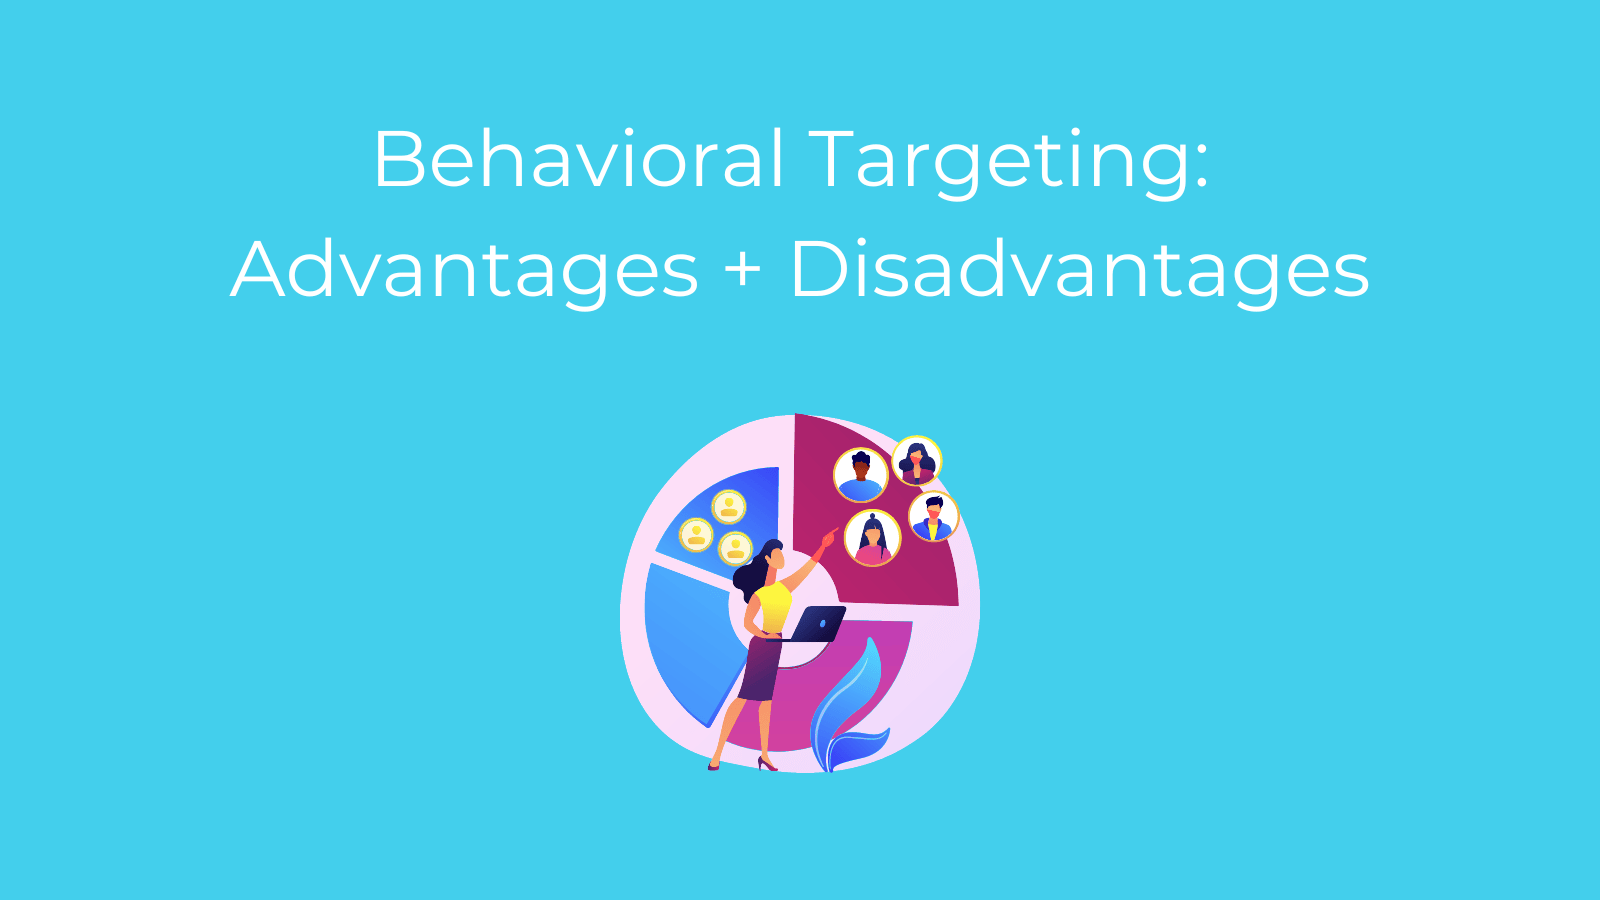 Behavioral Targeting Advantages and Disadvantages